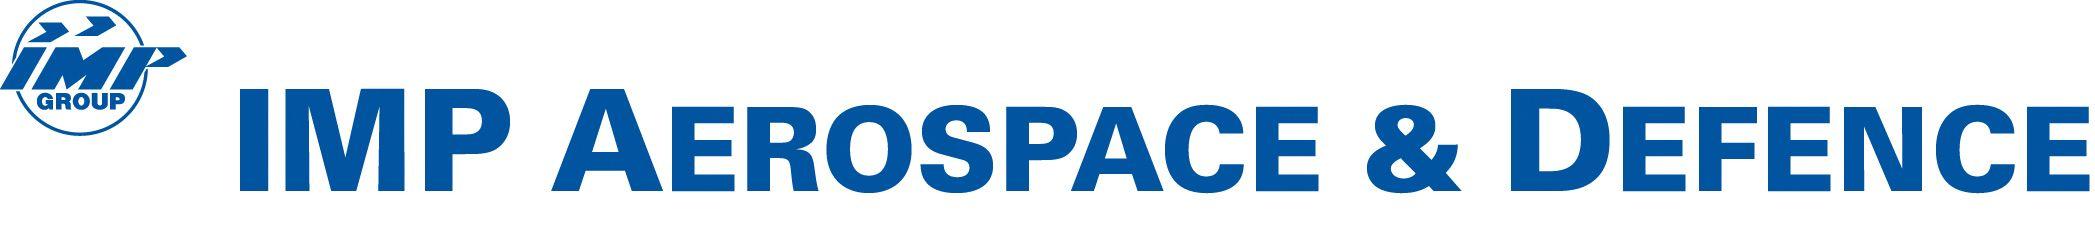 Aerospace and Defense Company Logo - IMP Aerospace and Defence - Aerospace Industries Association of ...